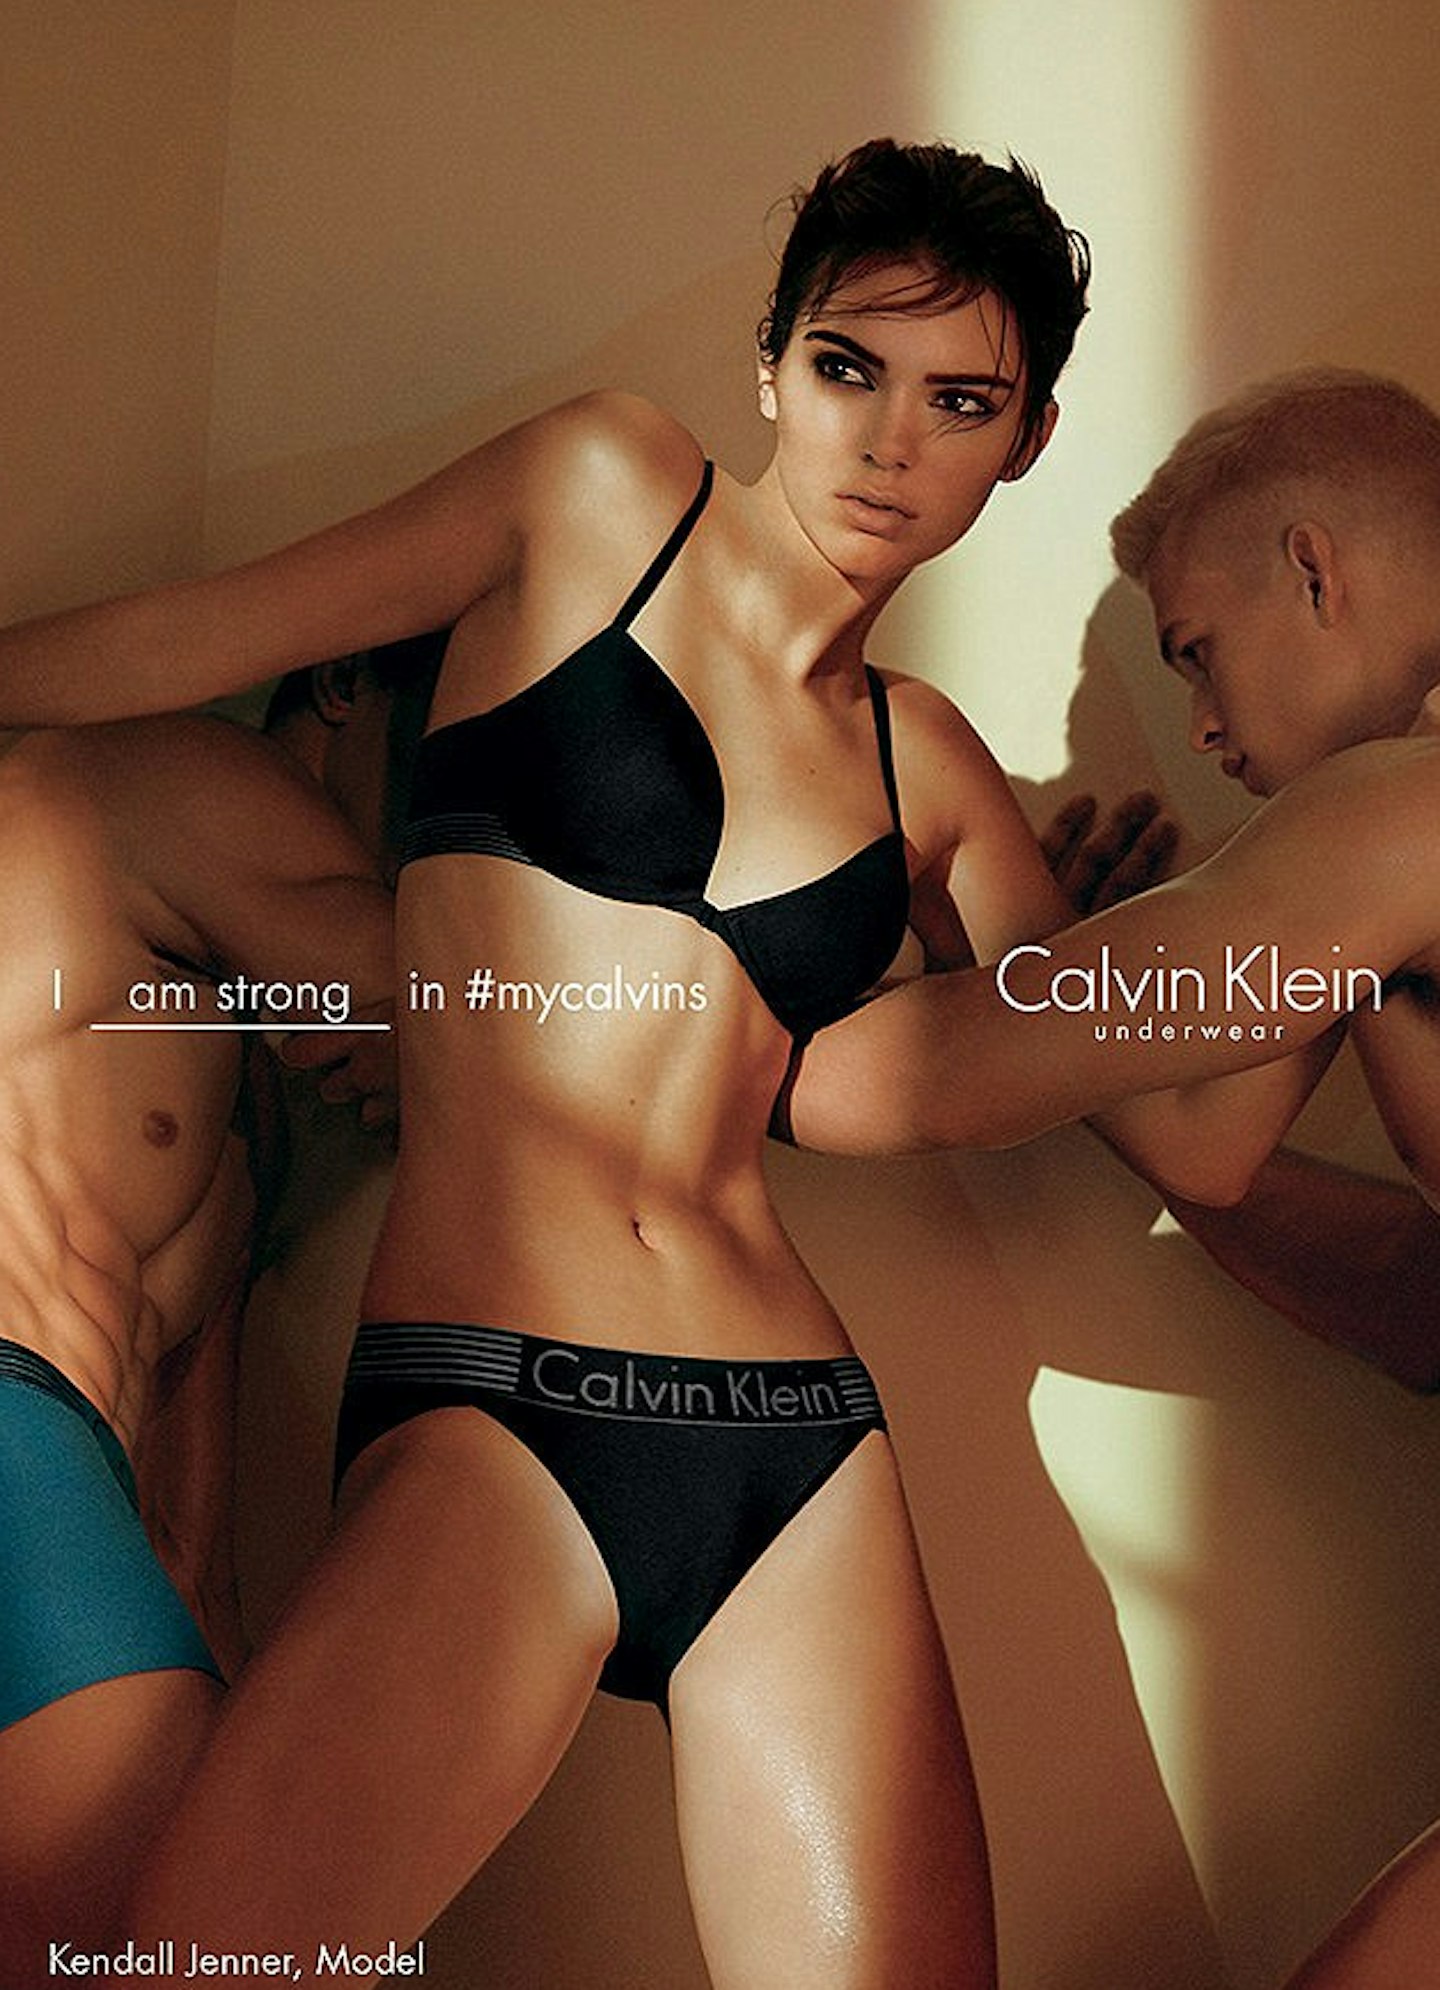 Kendall Jenner looks buff in new Calvin Klein underwear ads